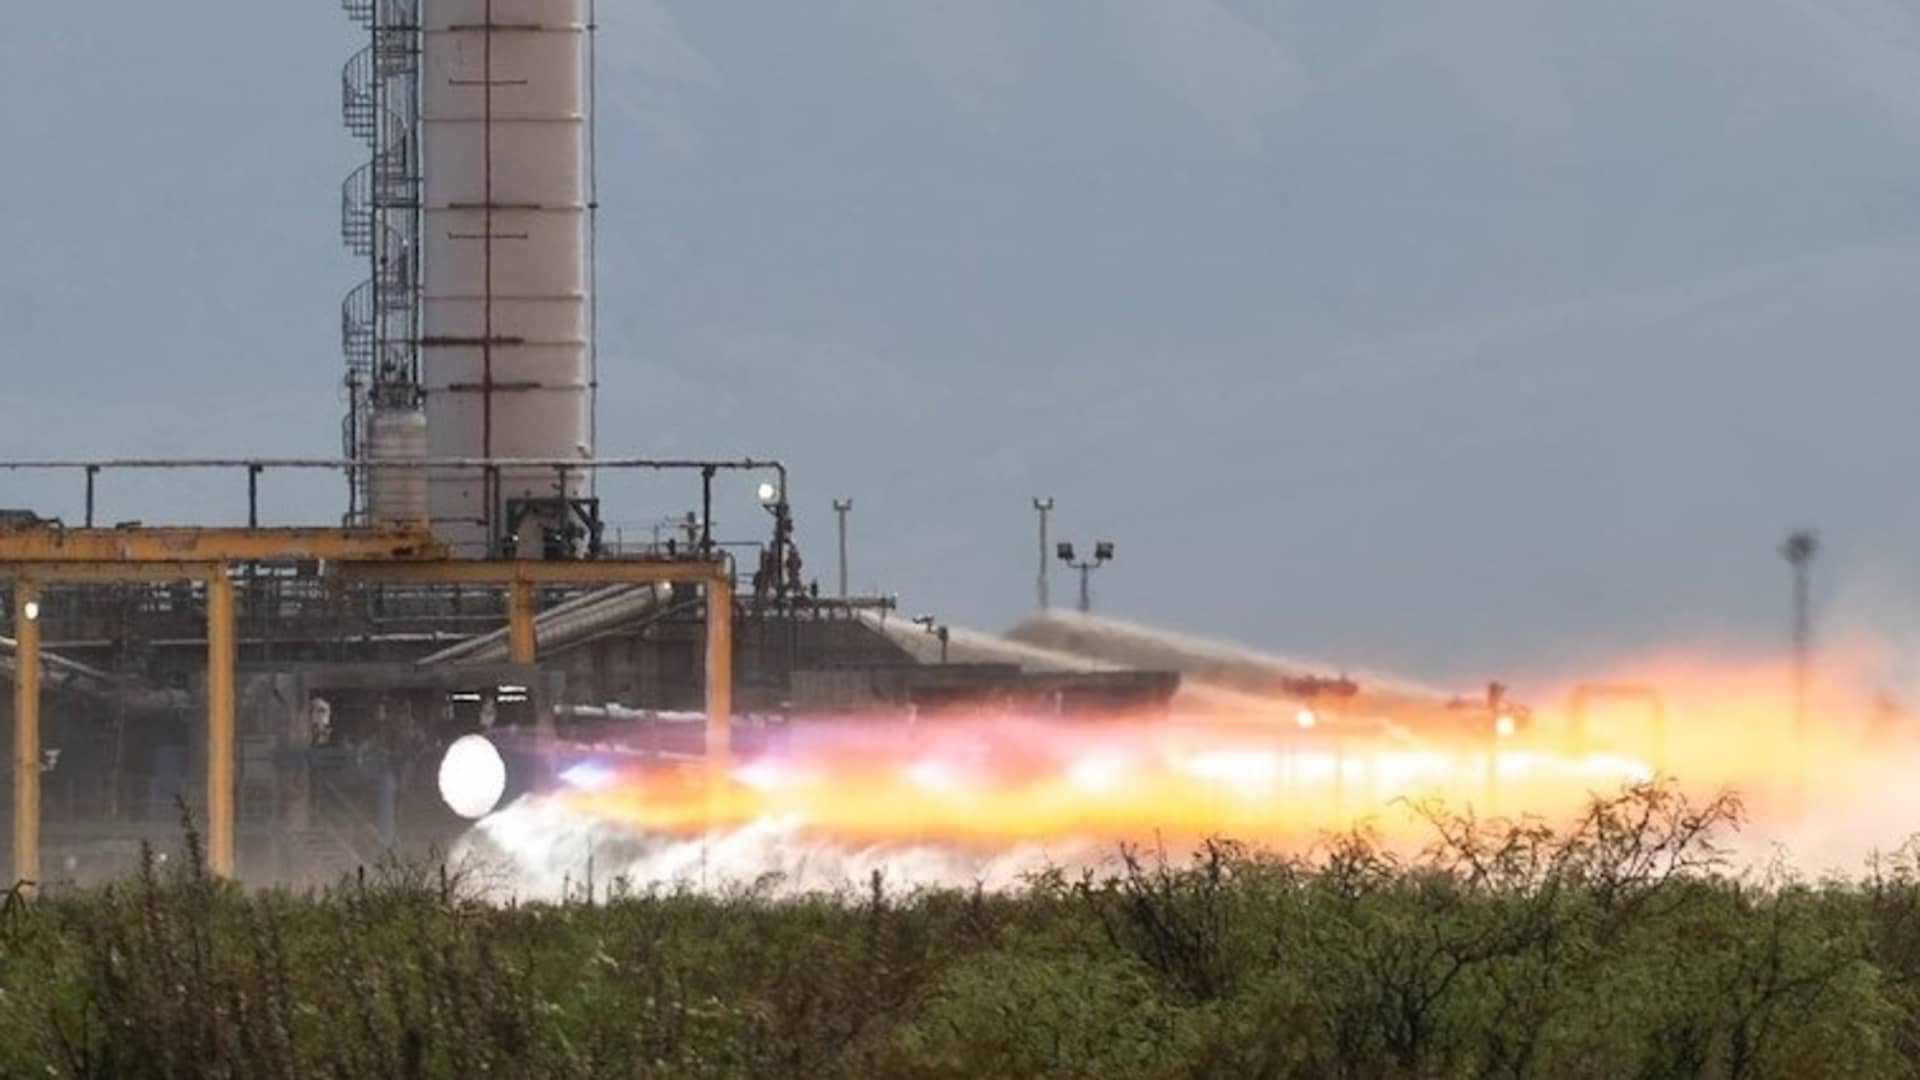 Jeff Bezos’ Blue Origin rocket engine explodes during testing